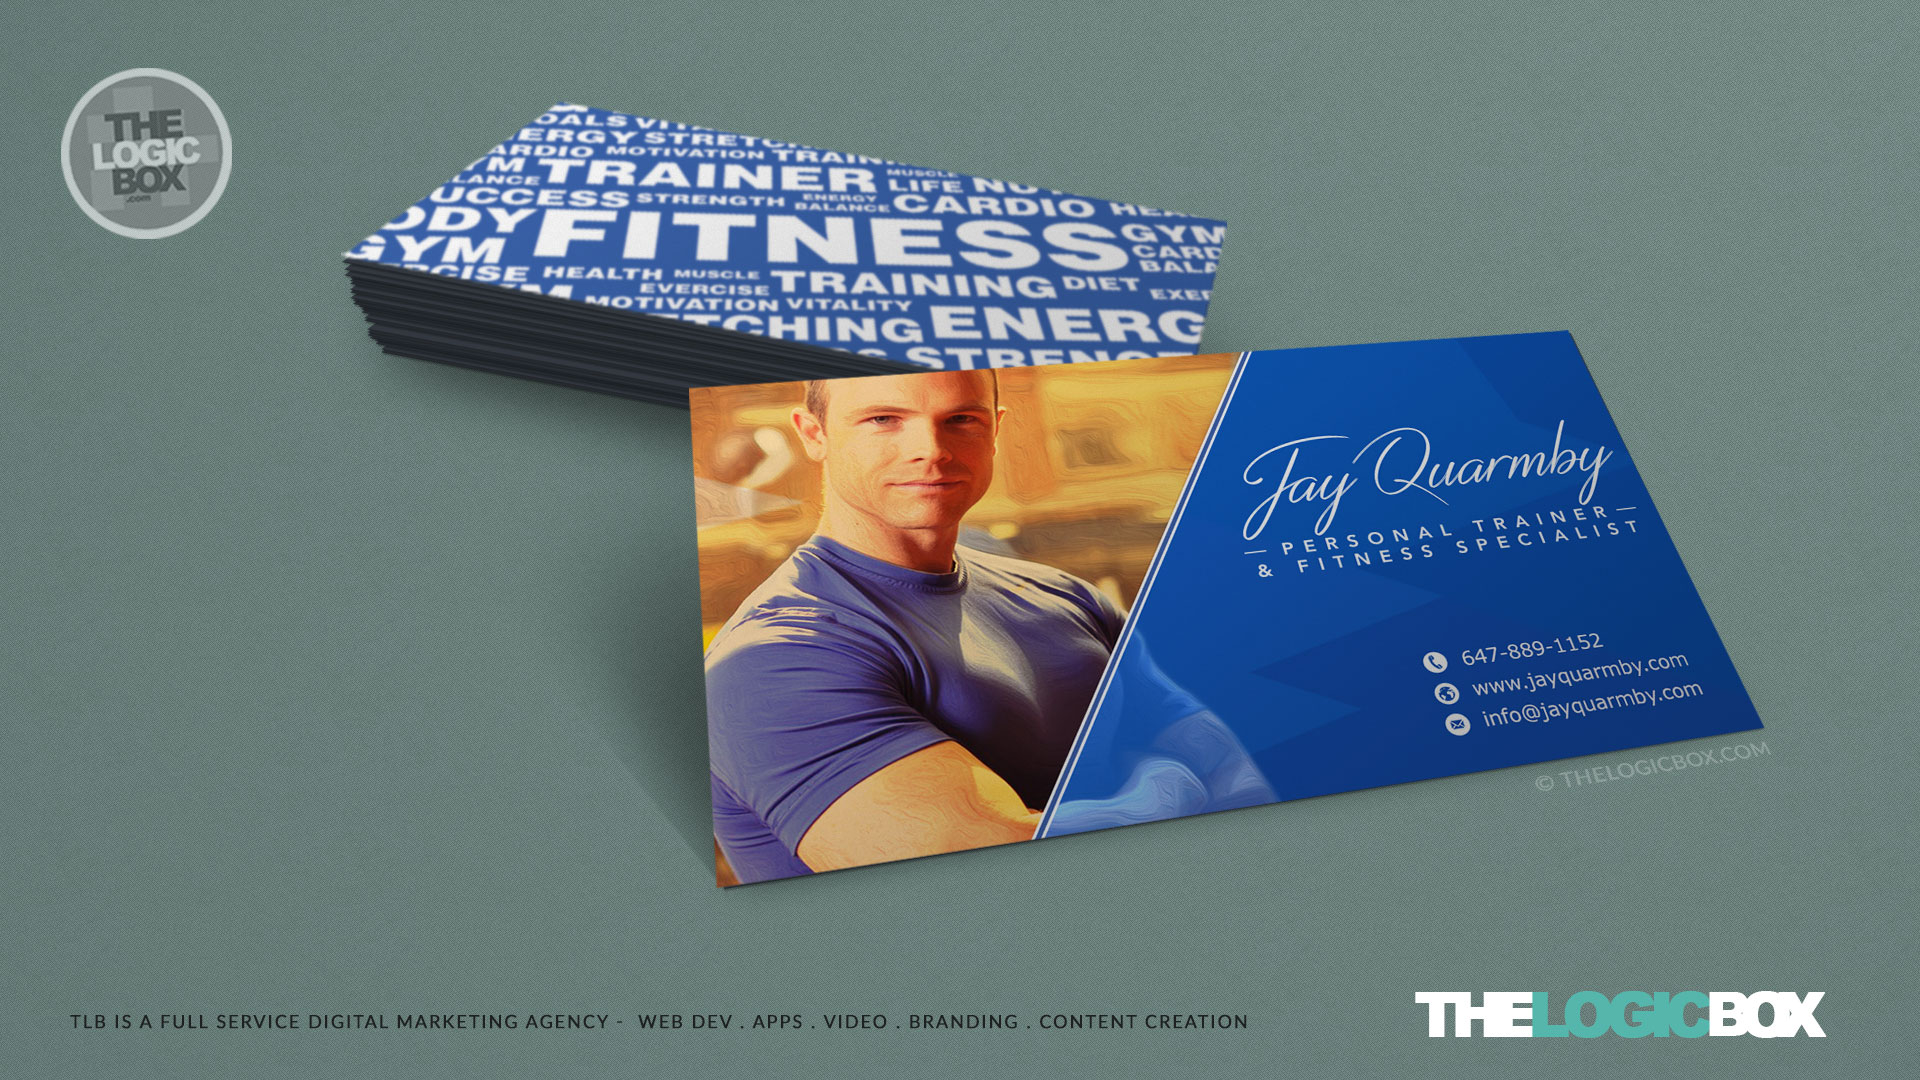 business-card-presentation-mockup-psd-1920x1080-thelogicbox-jay-Quarmby-fitness